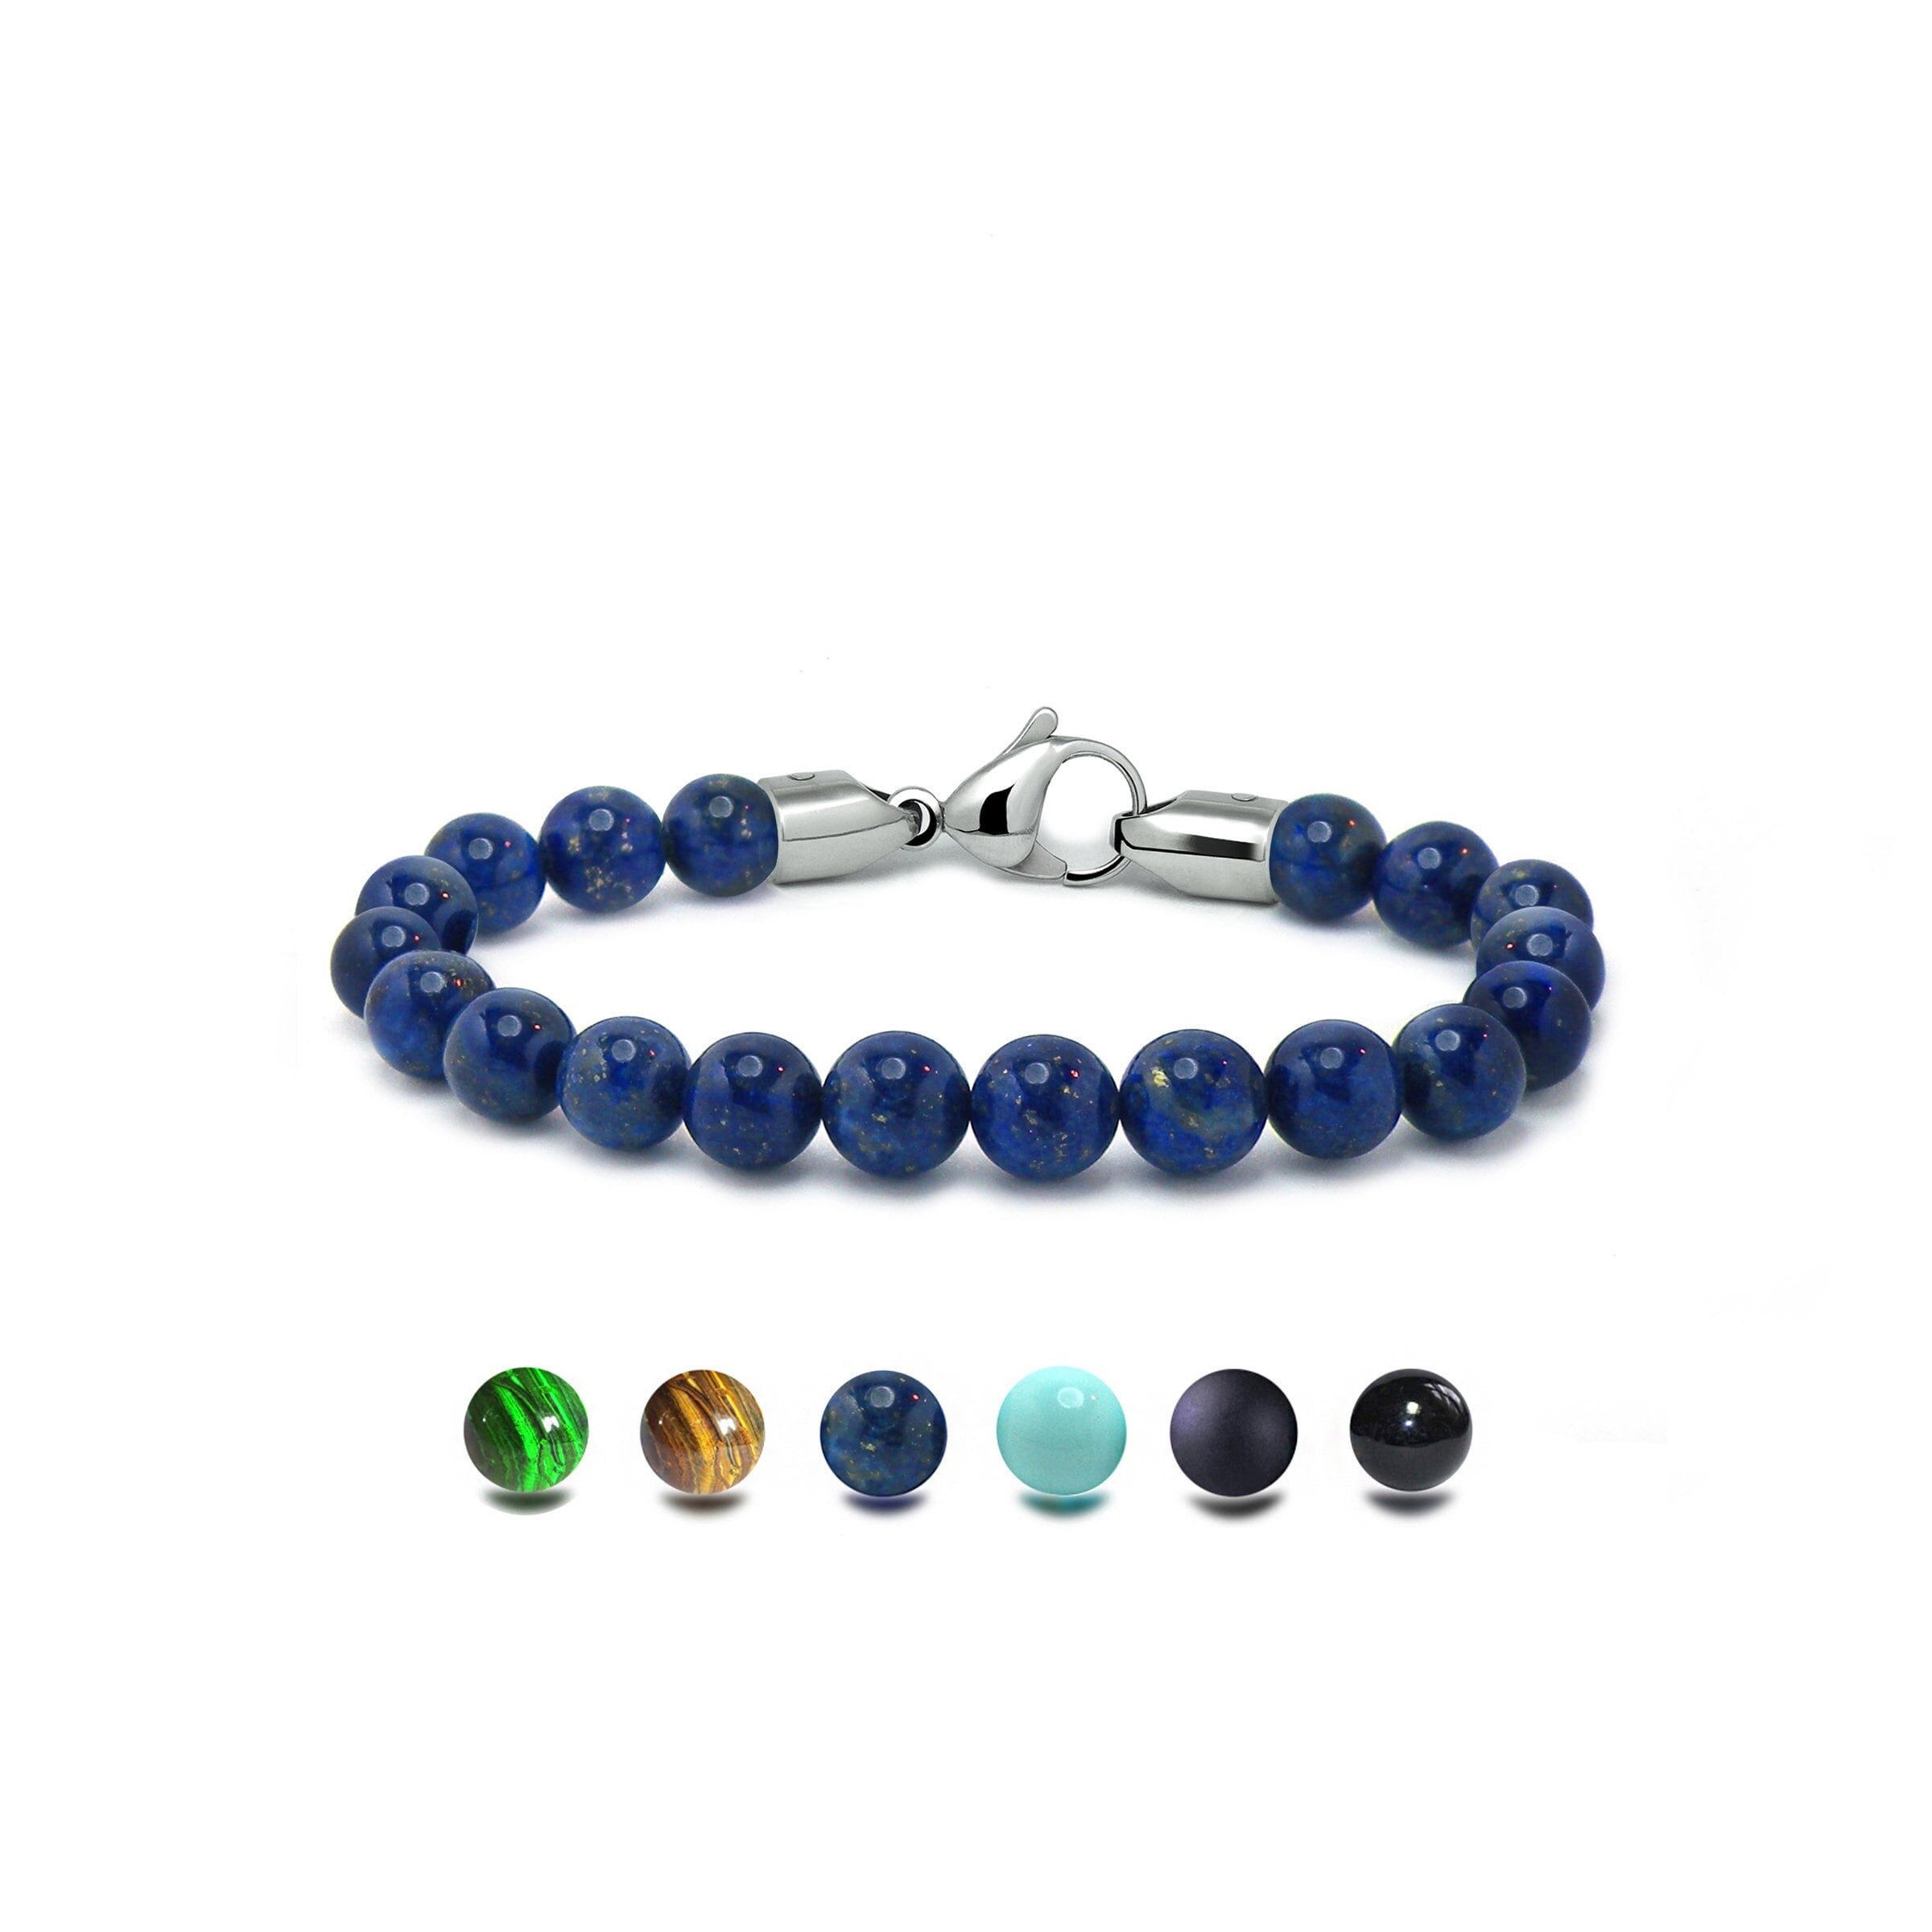 8mm Lapis Lazuli beaded spiritual bracelet stainless steel clasp by